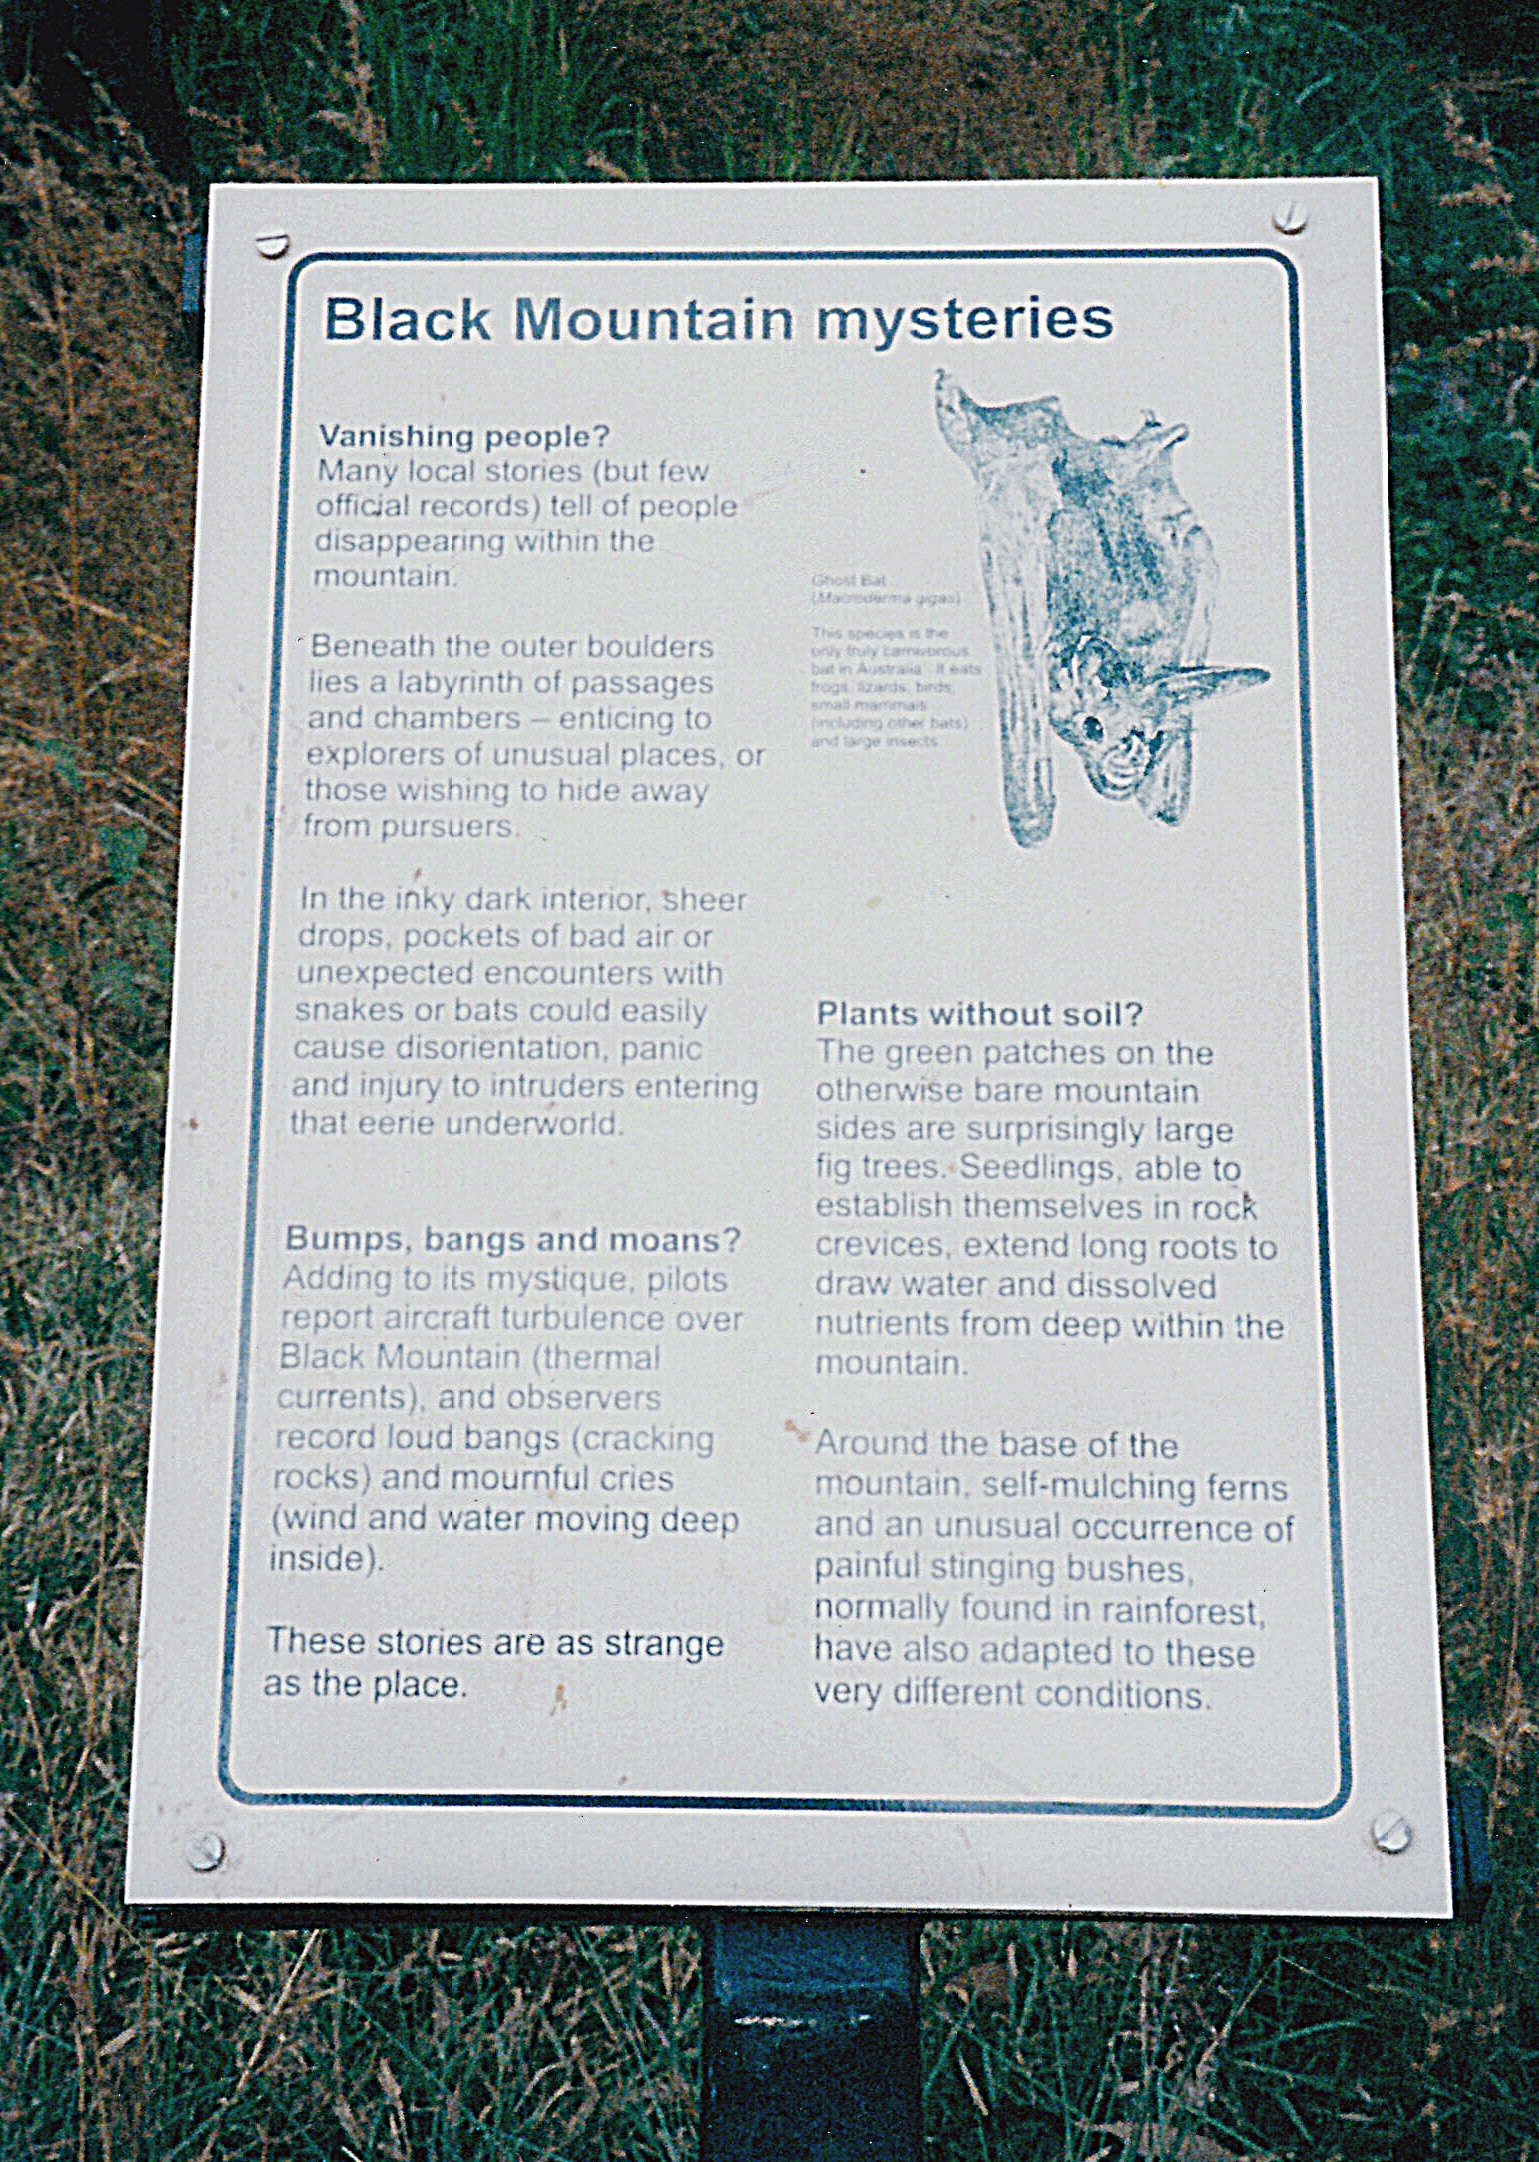 06-30-1998 06 Black Mt explanation.jpg